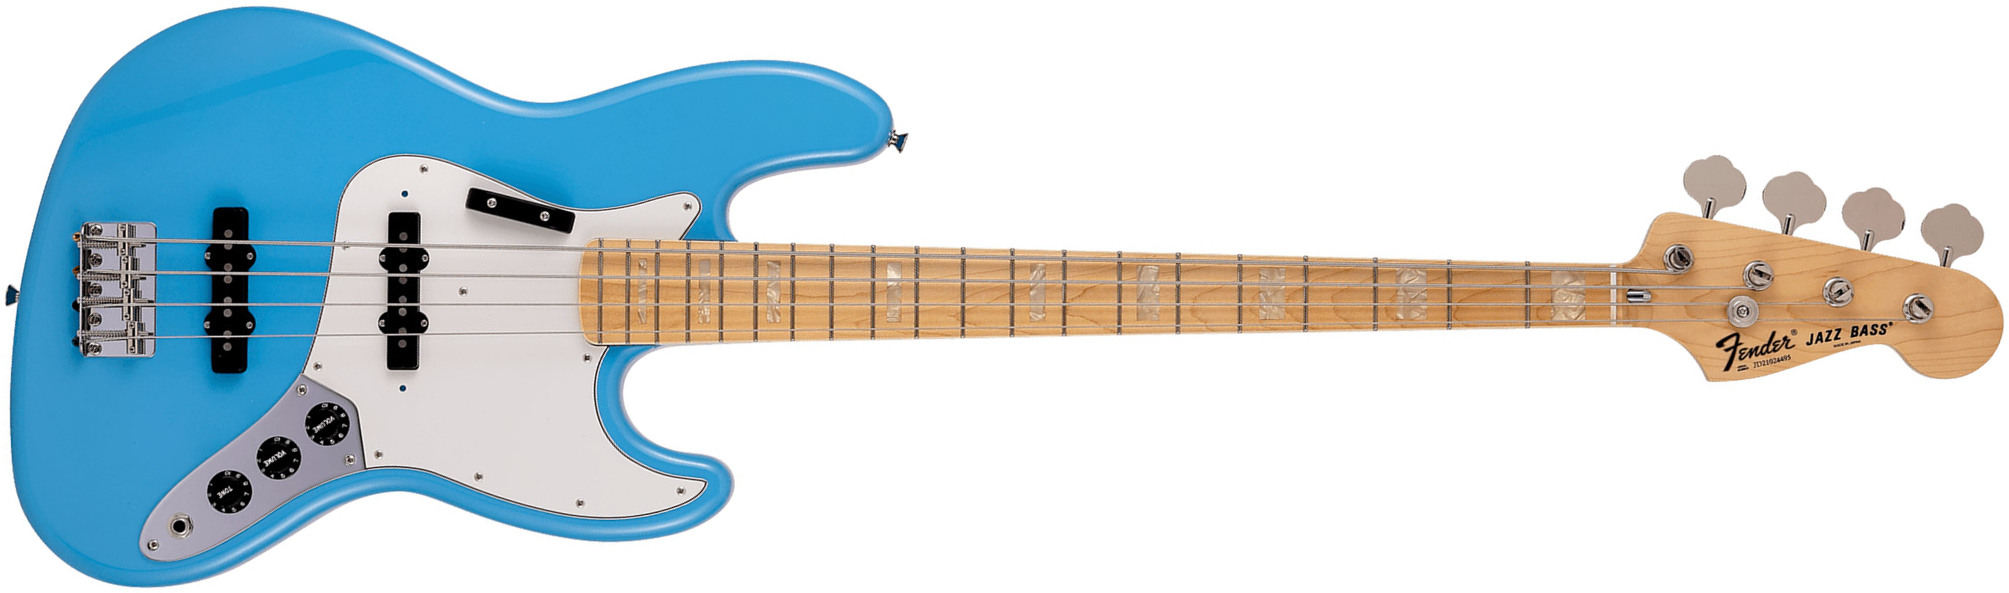 Fender Jazz Bass International Color Ltd Jap Mn - Maui Blue - Solid body electric bass - Main picture